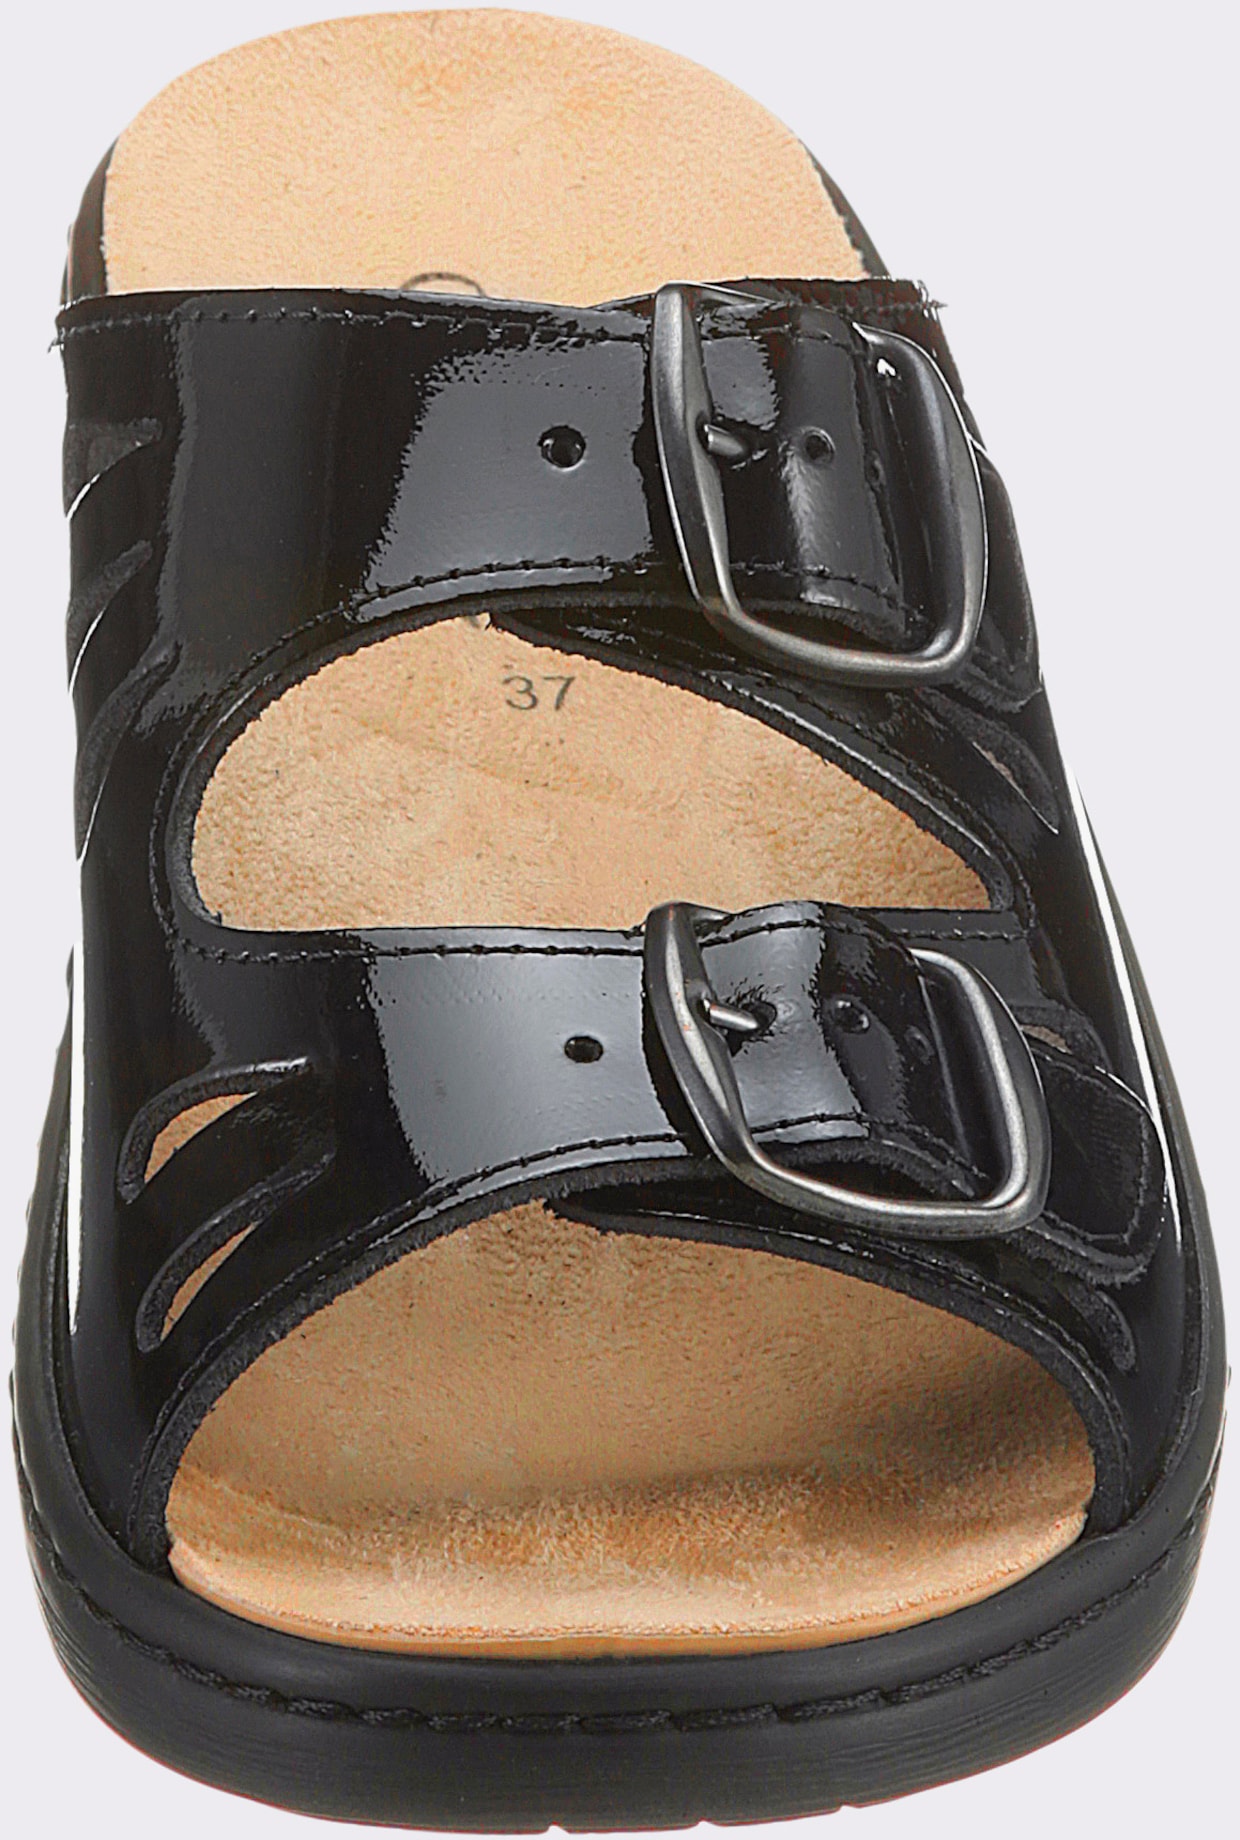 airsoft comfort+ slippers - zwart